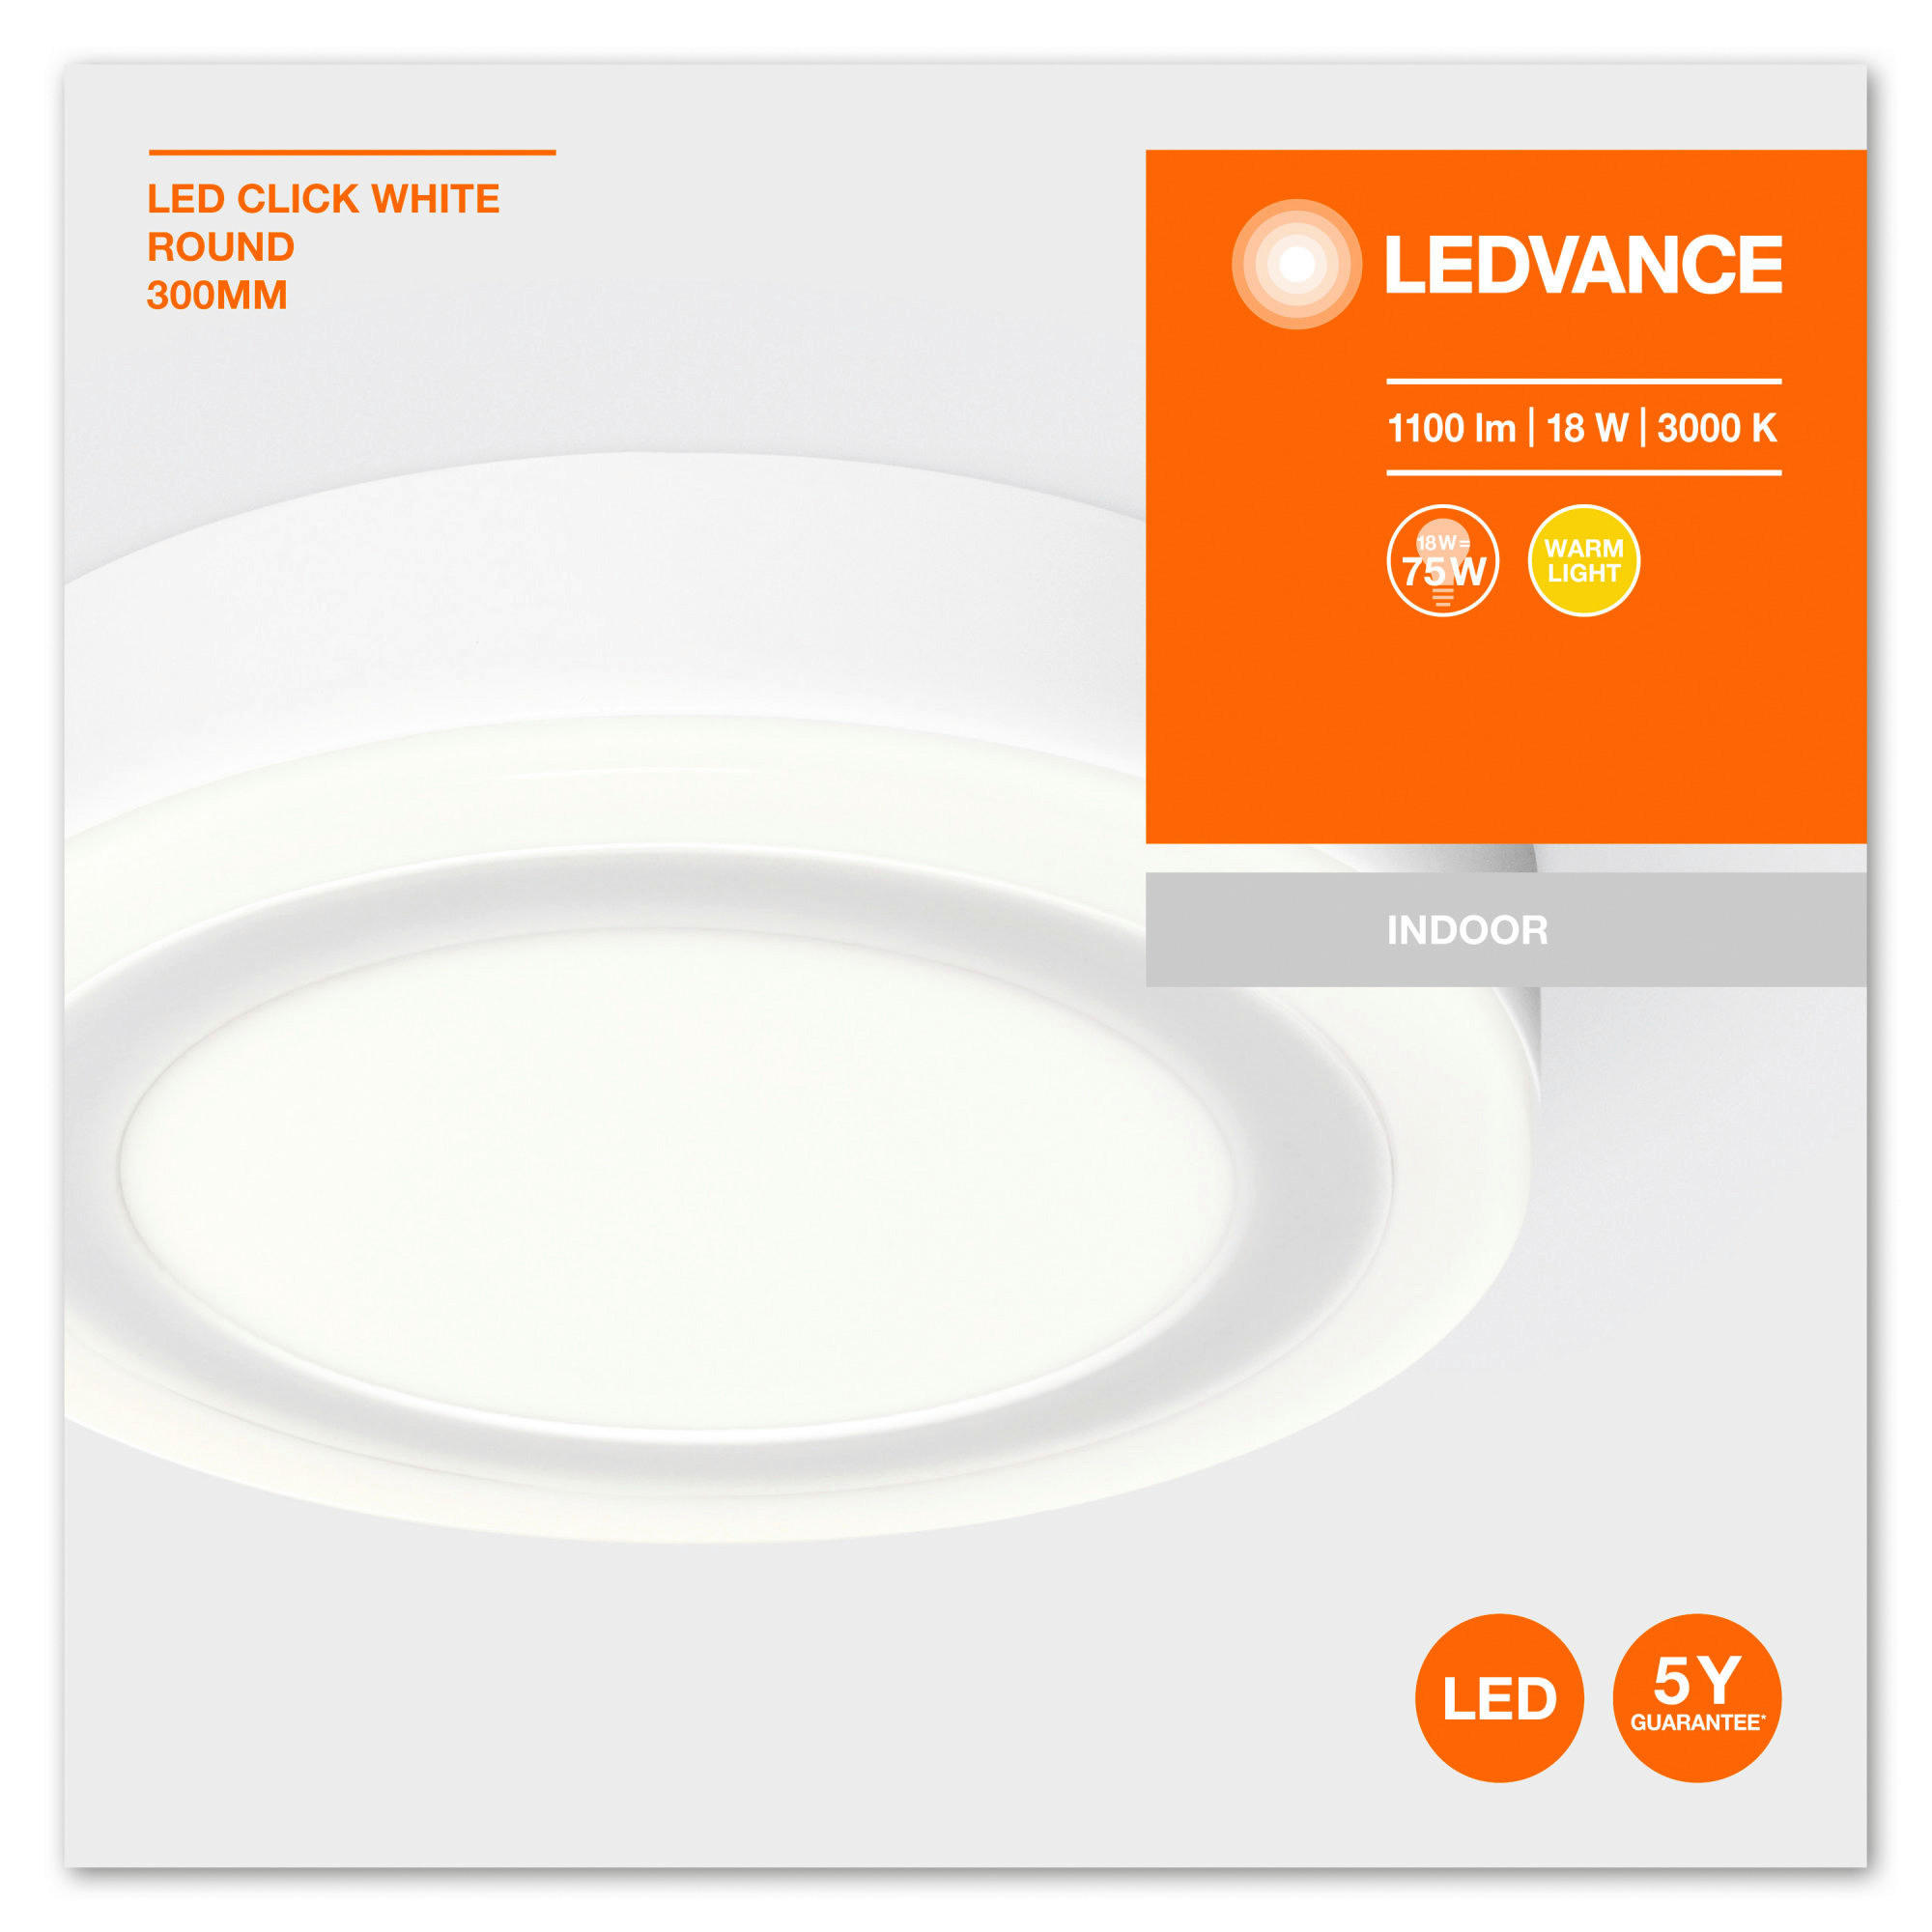 LED-DECKENLEUCHTE LED Click White RD  - Weiß, Basics, Kunststoff/Metall (29,9/4,5cm) - Ledvance